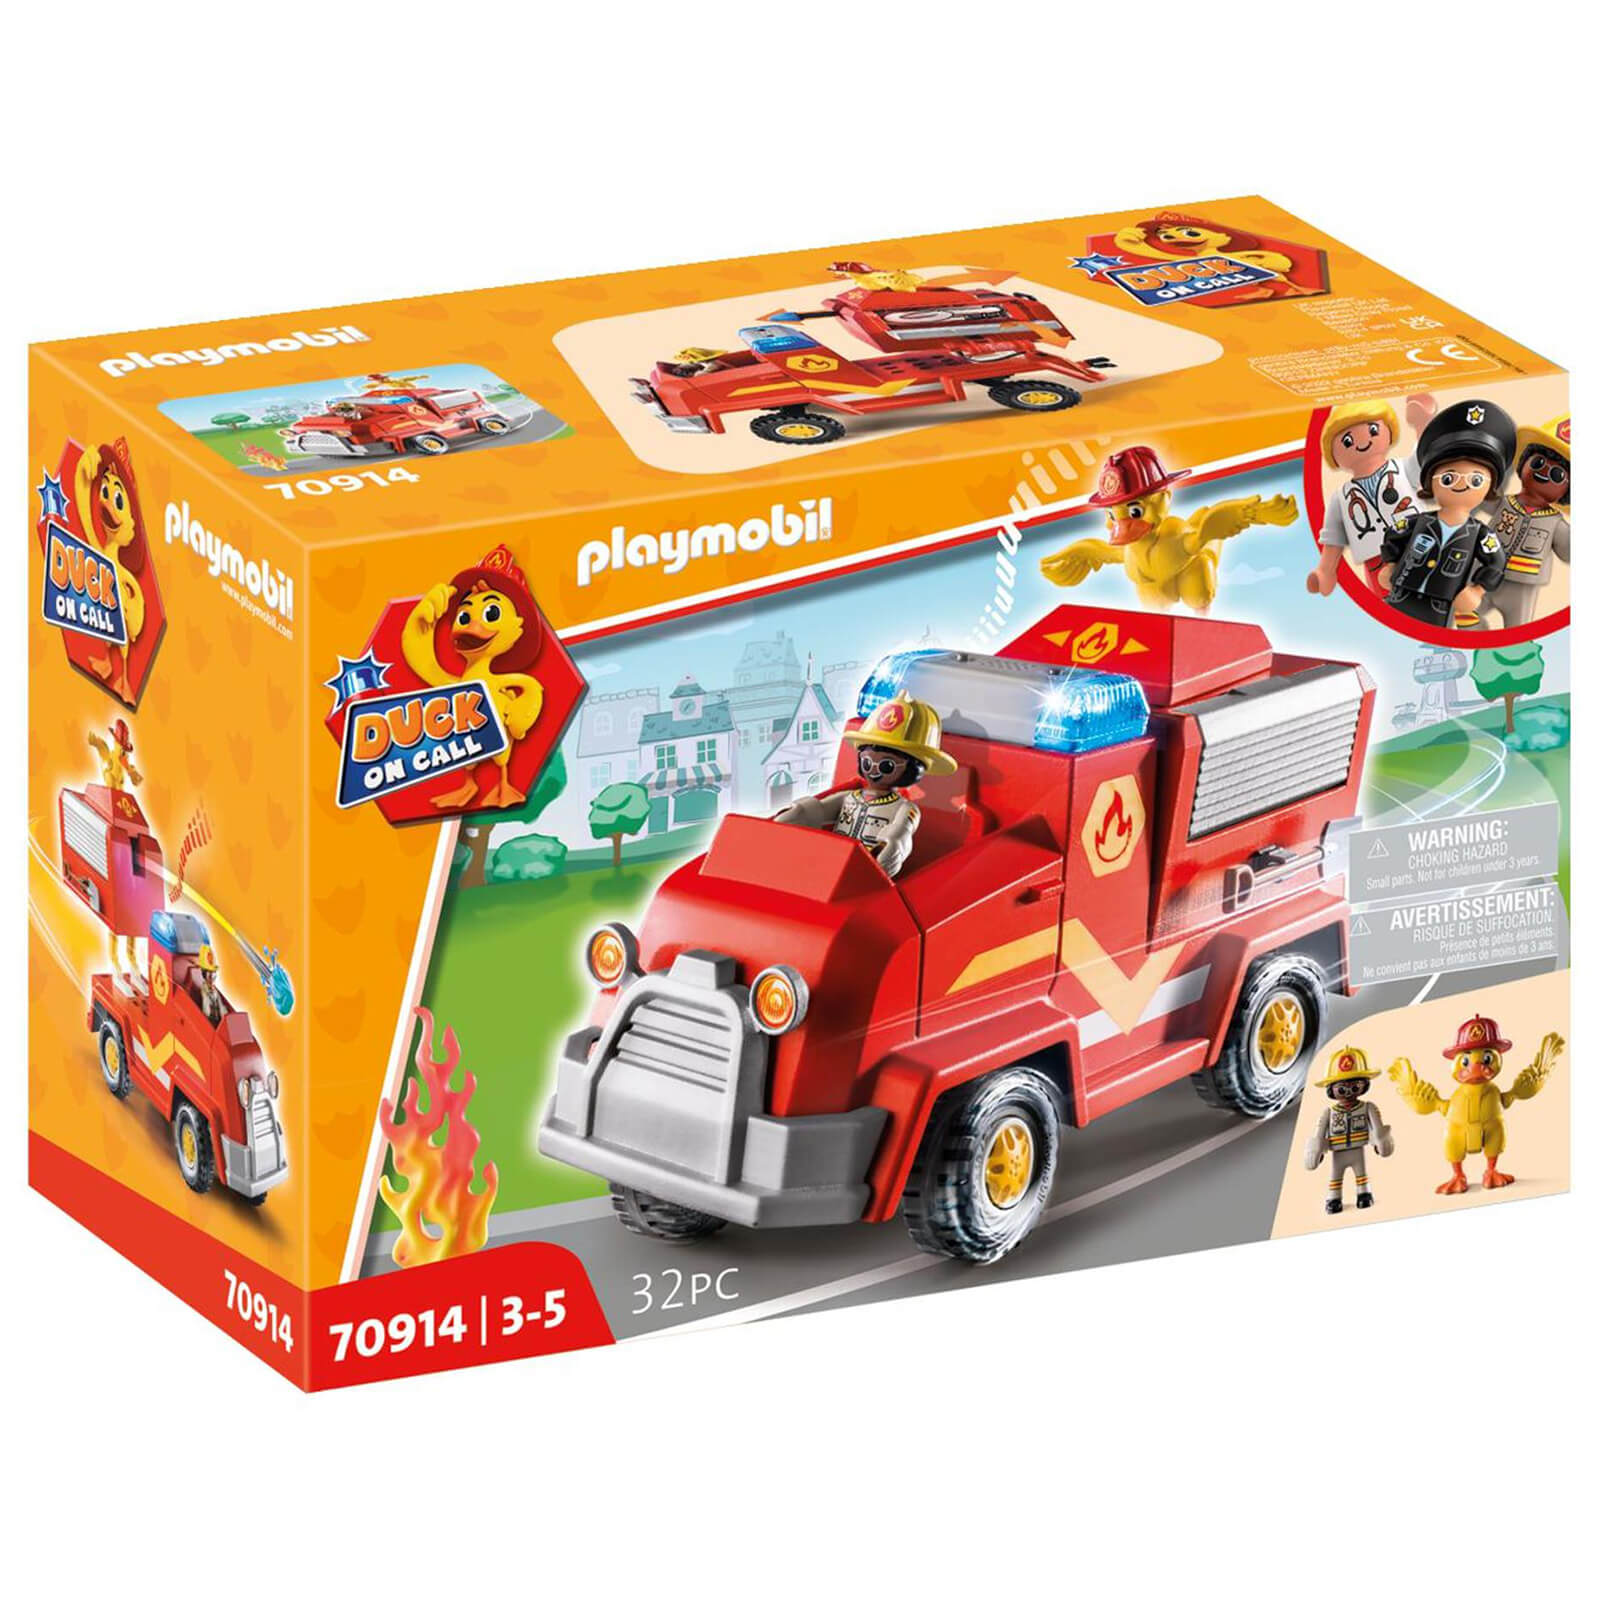 Playmobil D.O.C.  Fire Brigade Emergency Vehicle (70914)